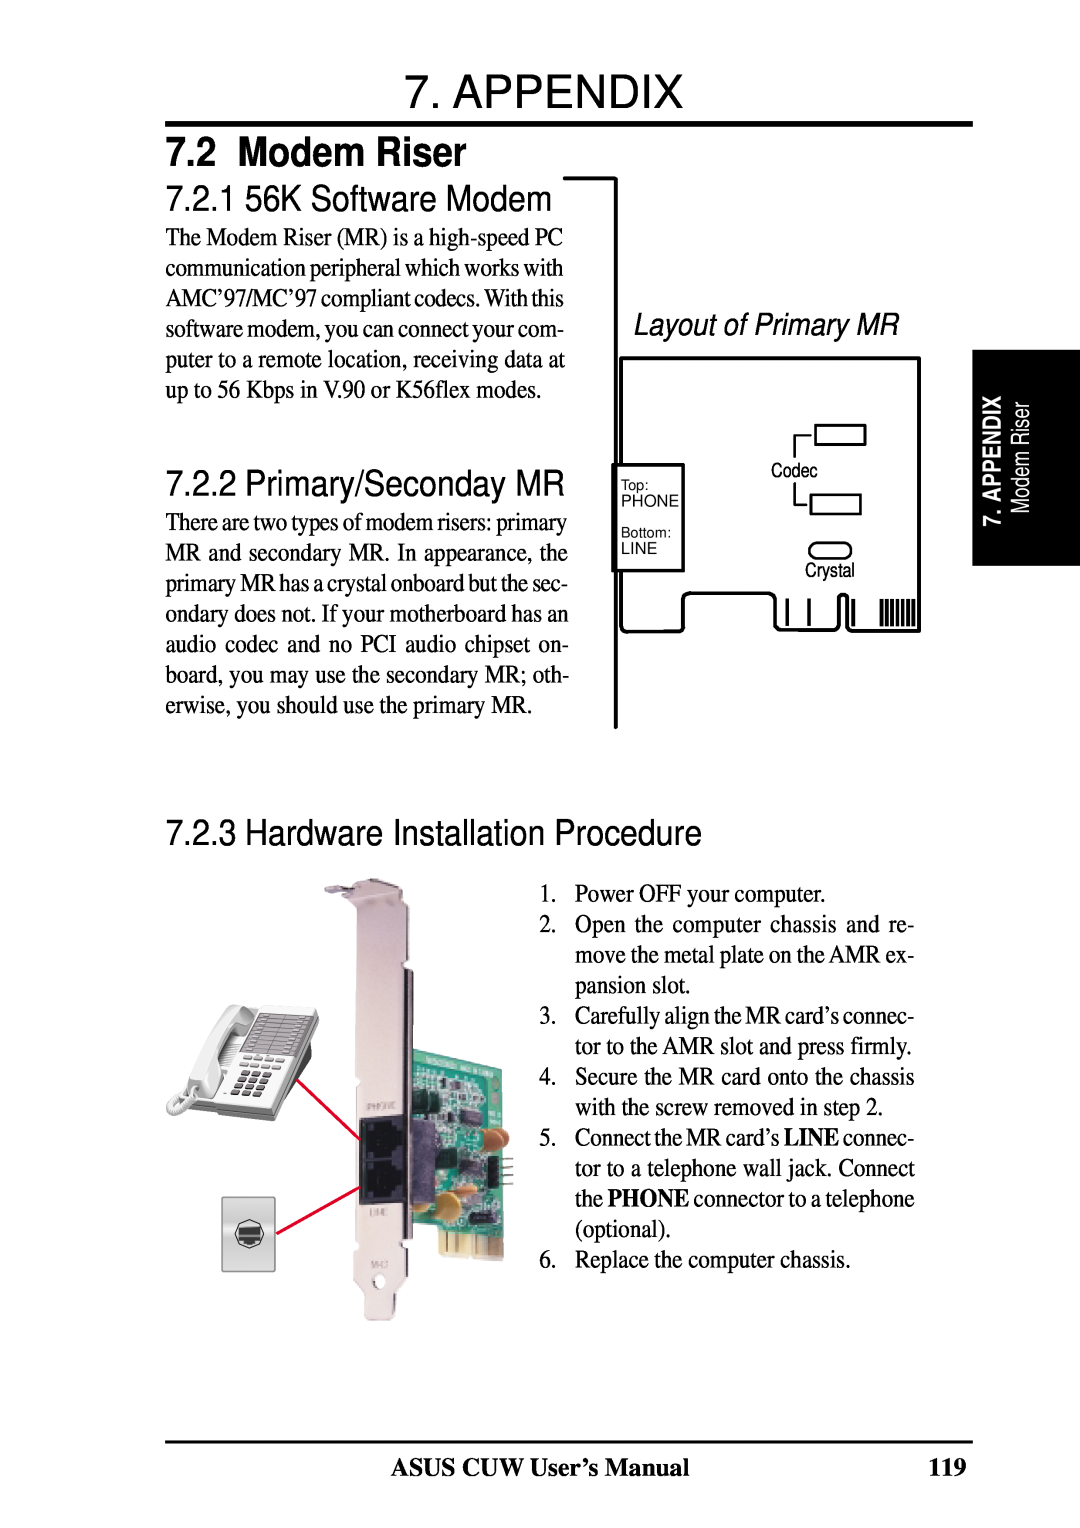 Asus 810 Modem Riser, 7.2.1 56K Software Modem, Primary/Seconday MR, Hardware Installation Procedure, Layout of Primary MR 